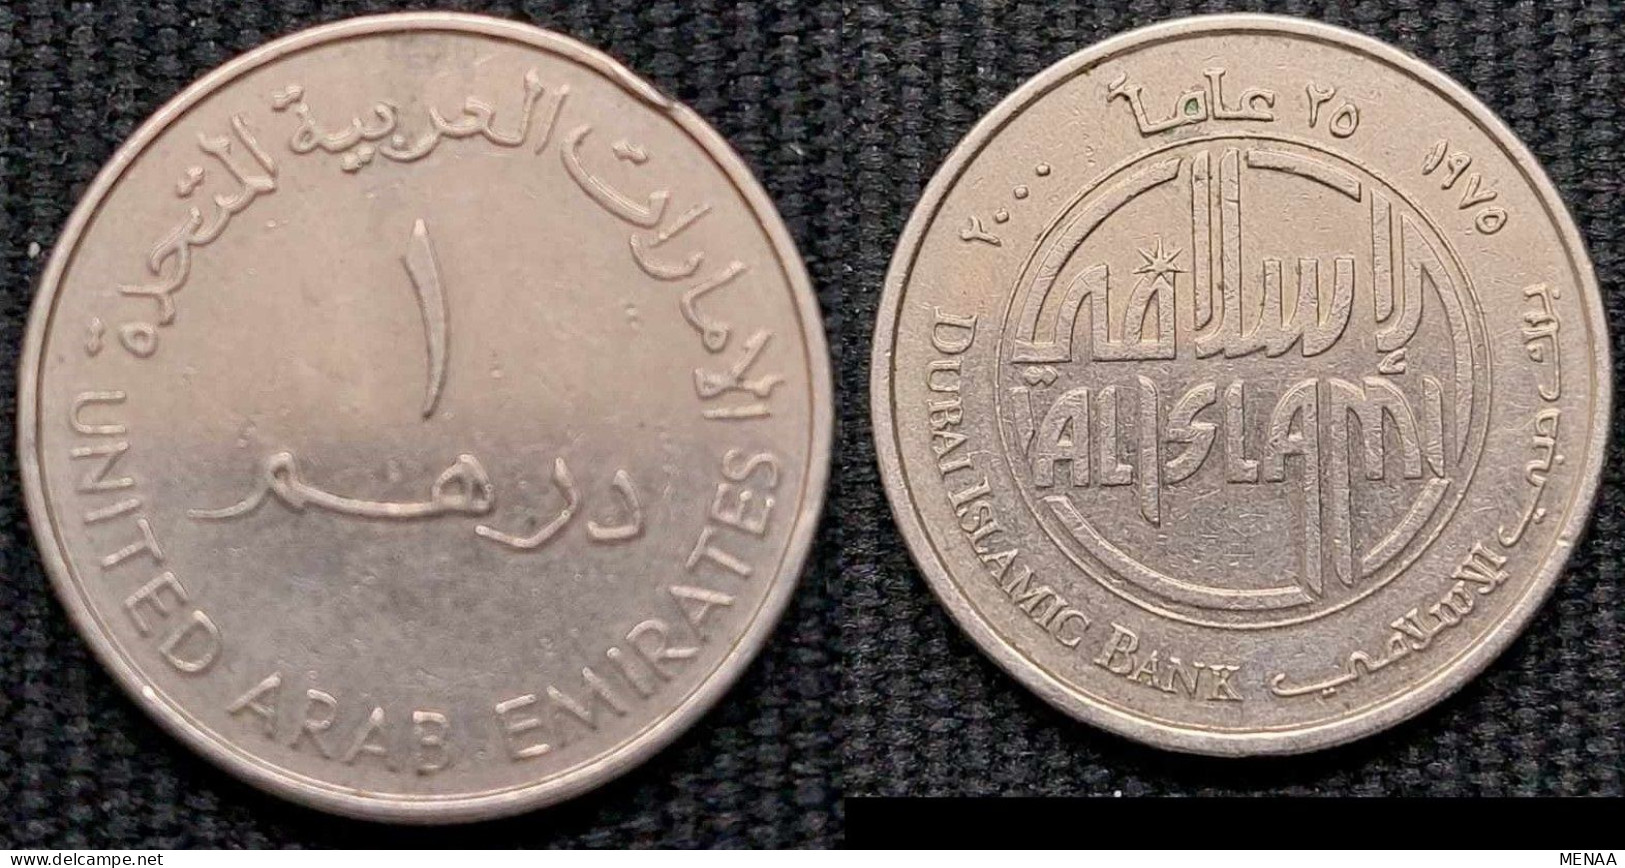 United Arab Emirates -1 Dirham -2000-The Silver Jubilee Of Dubai Islamic Bank - KM 43 - Emirats Arabes Unis